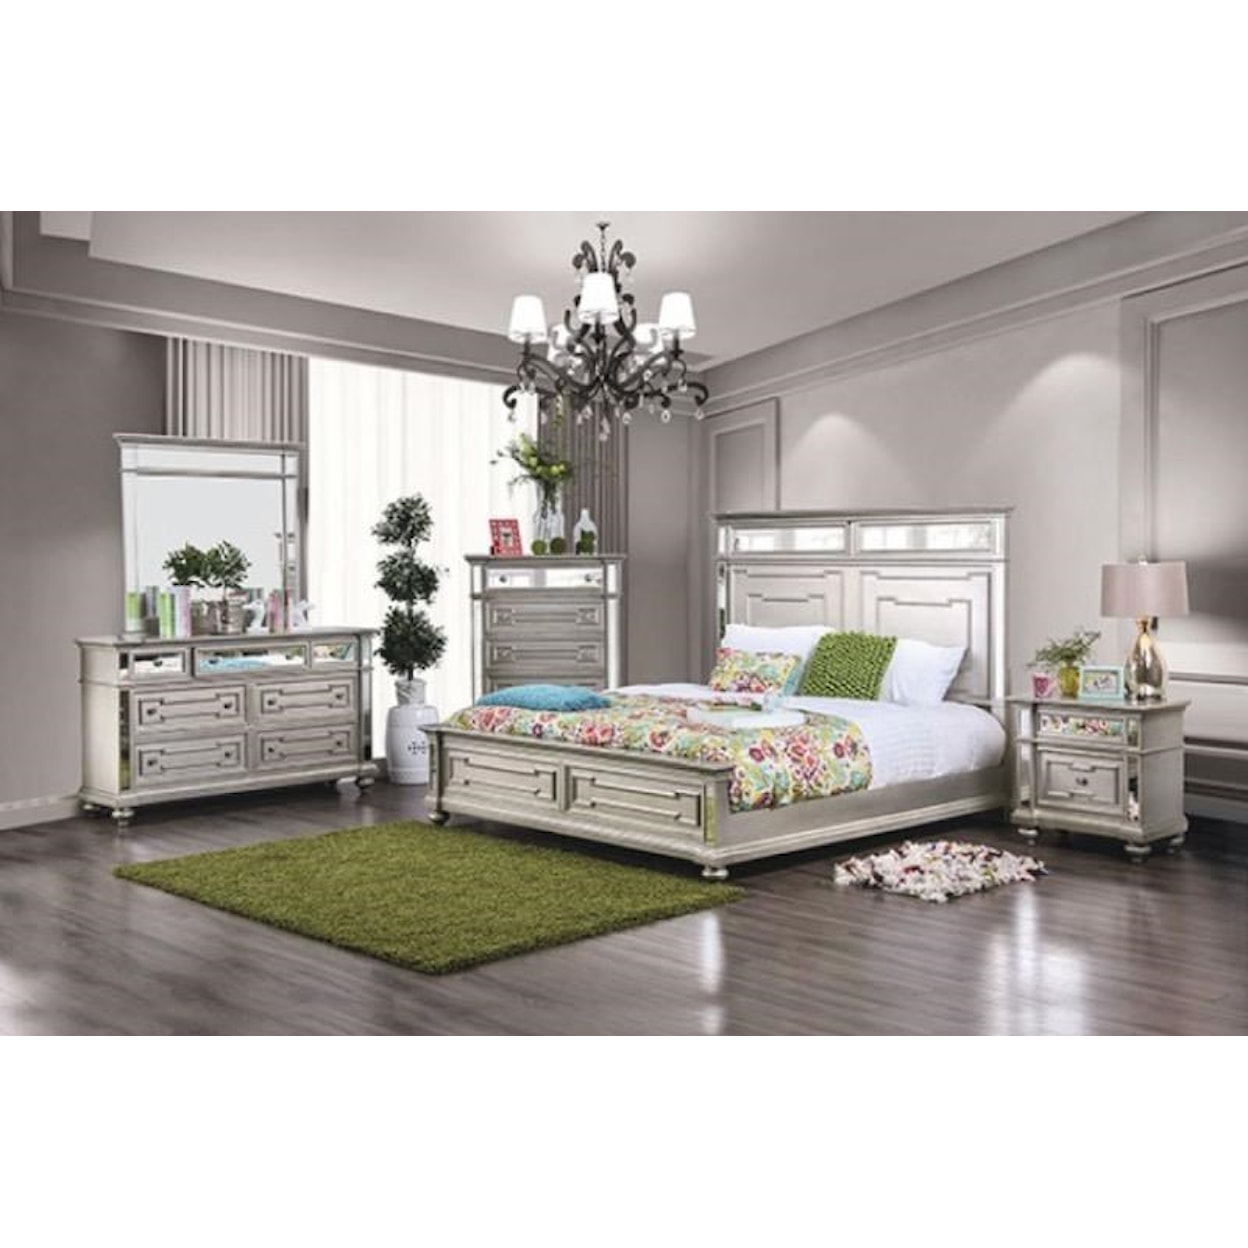 Furniture of America Salamanca Glam Queen Bedroom Set